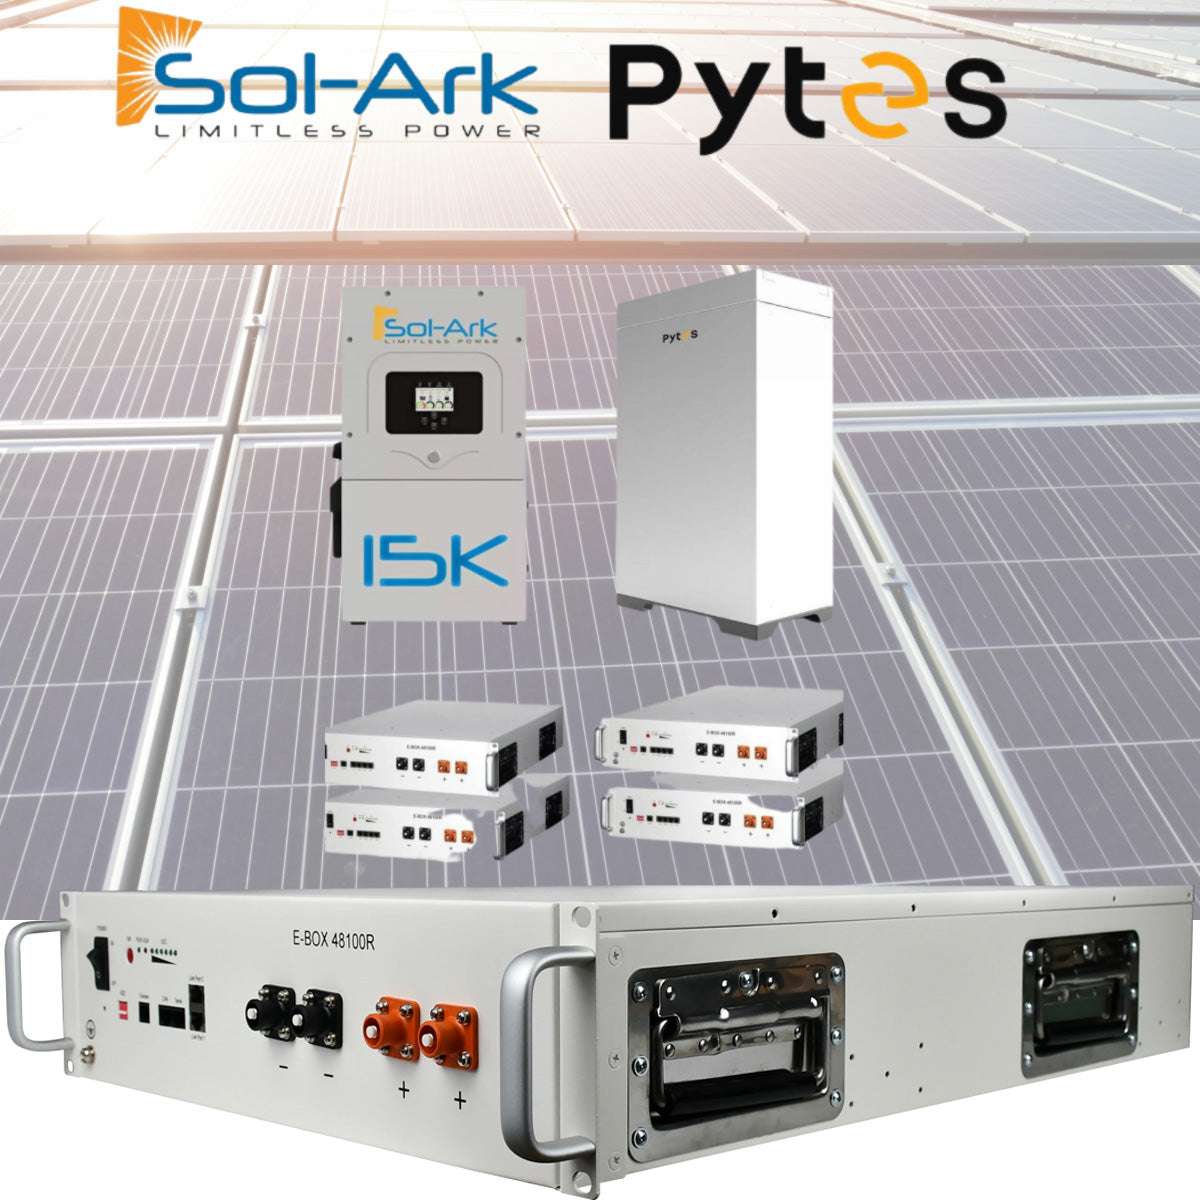 Sol-Ark 15K & Pytes 48V 400Ah Solar Kit with kinetic solar